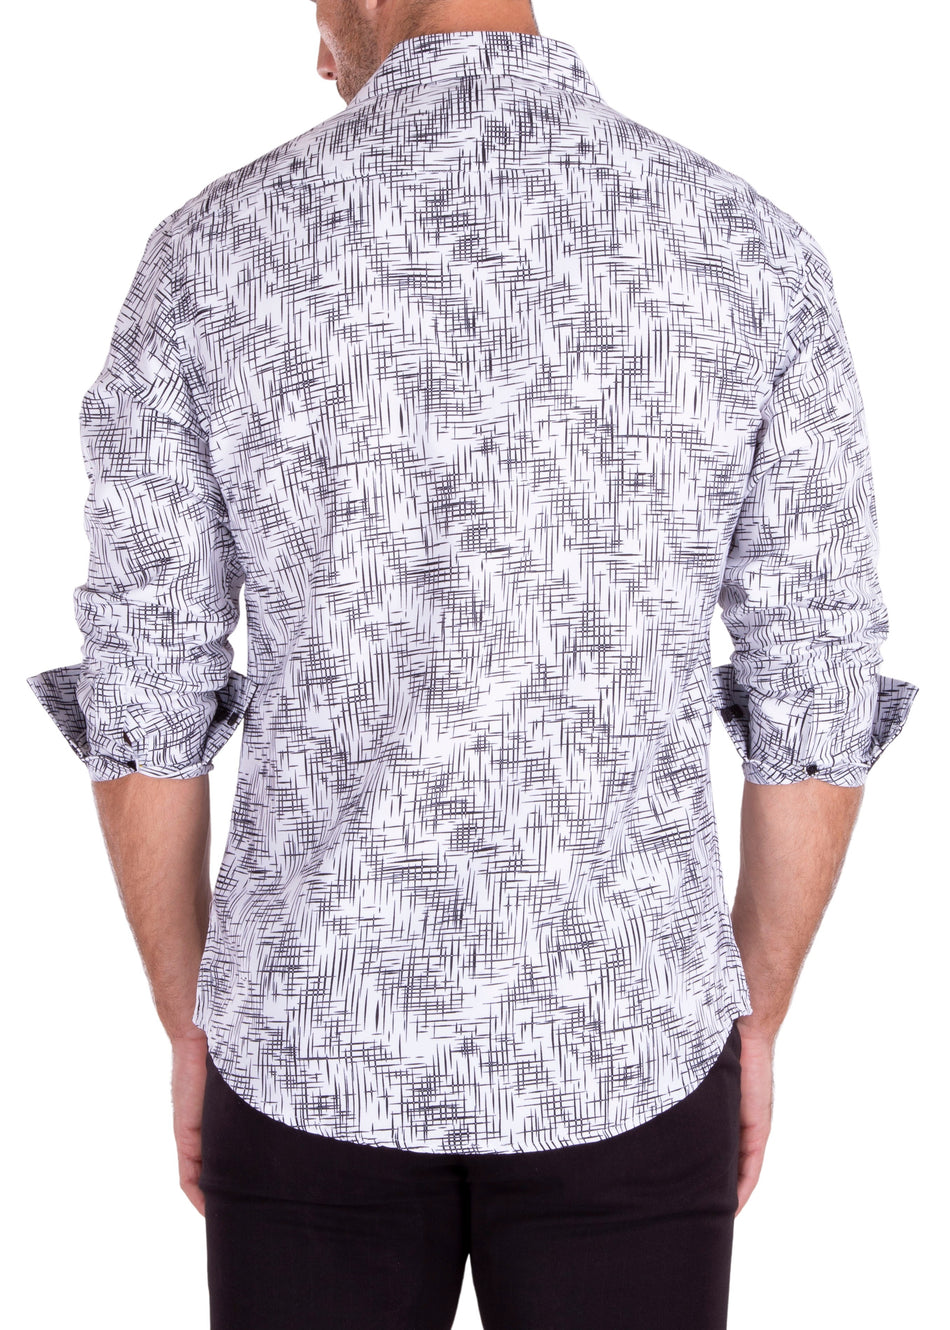 212391 - White Long Sleeve Shirt